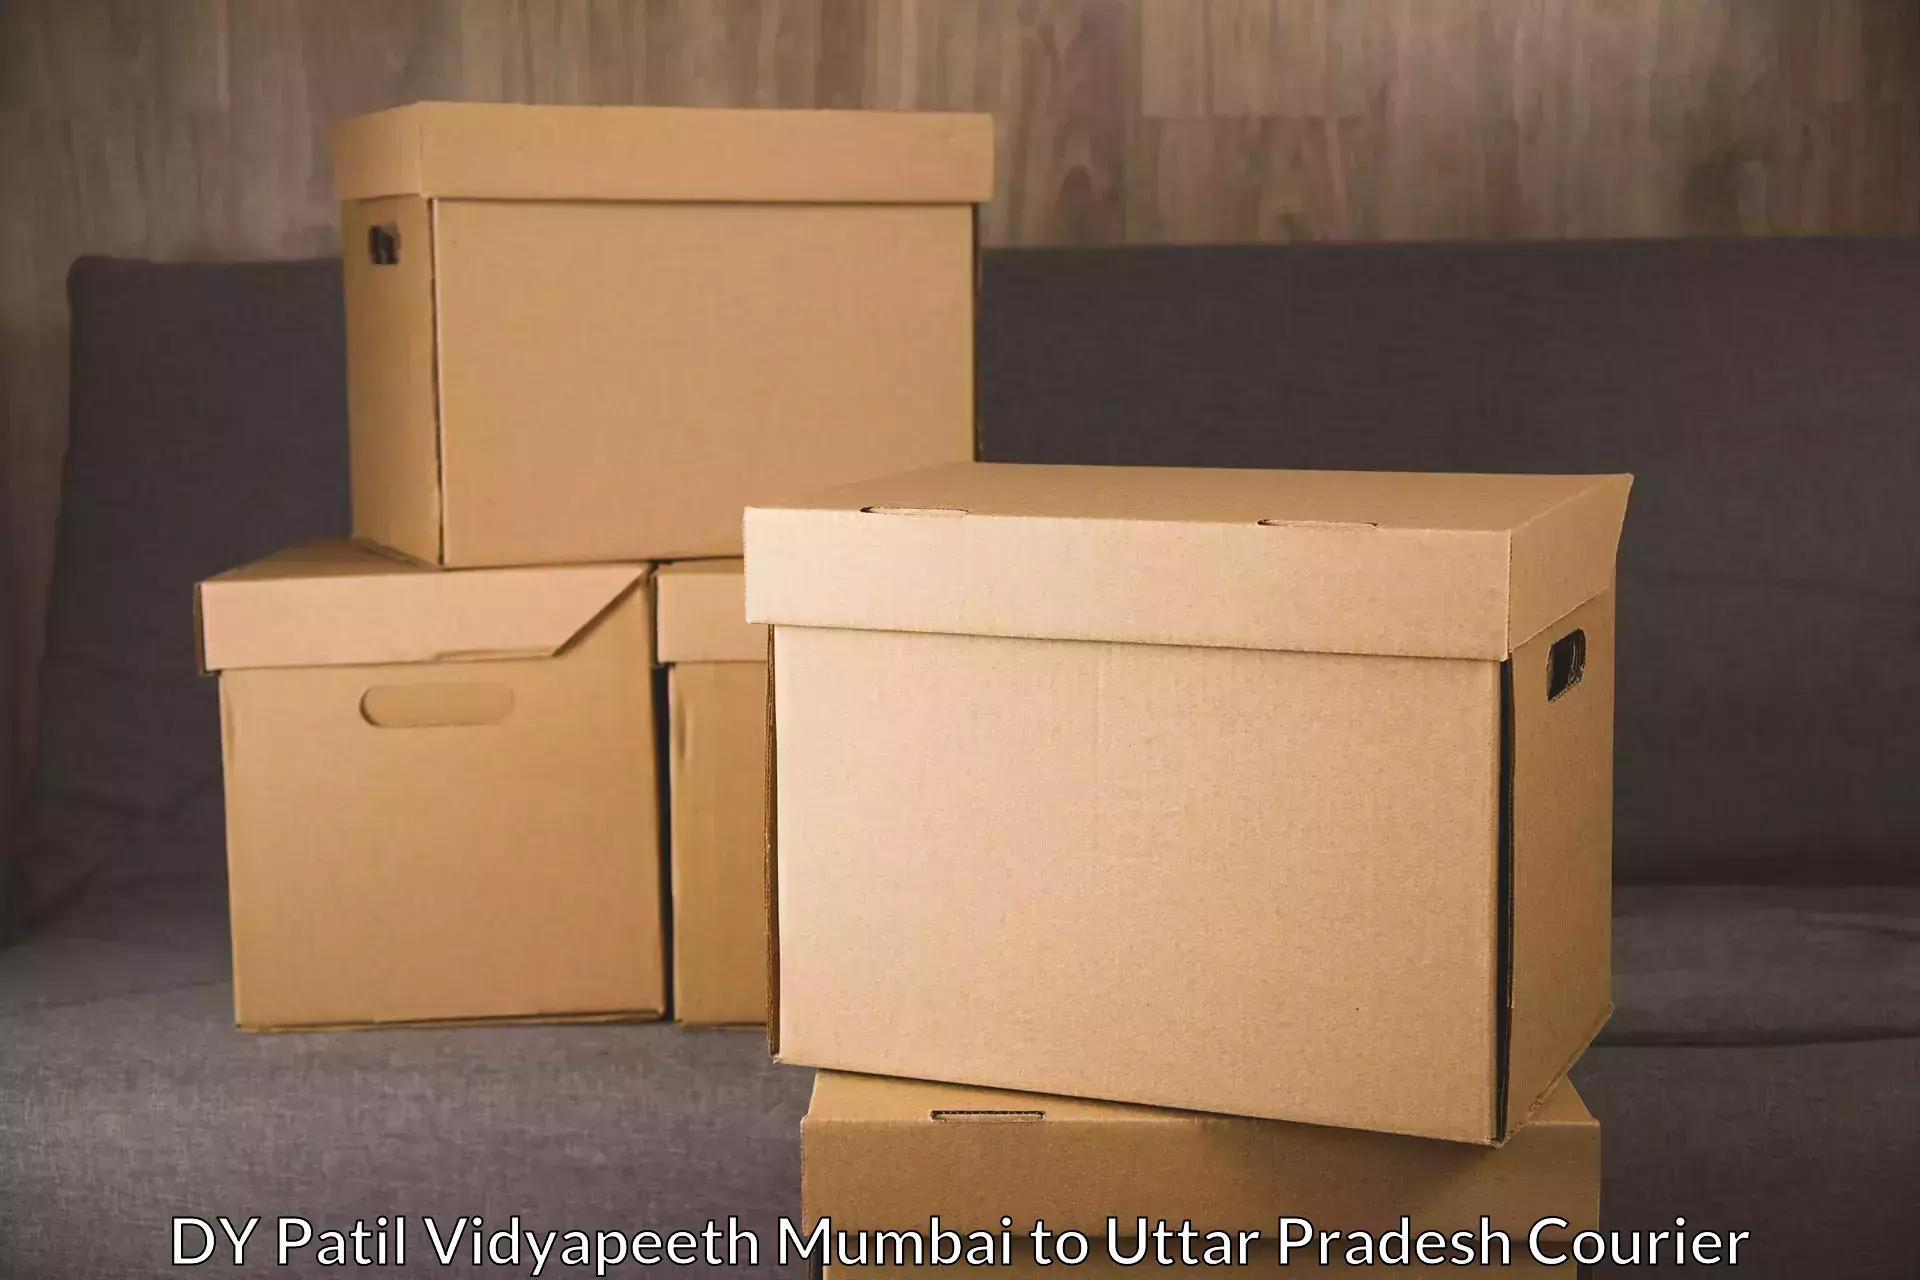 Full-service courier options DY Patil Vidyapeeth Mumbai to Amroha